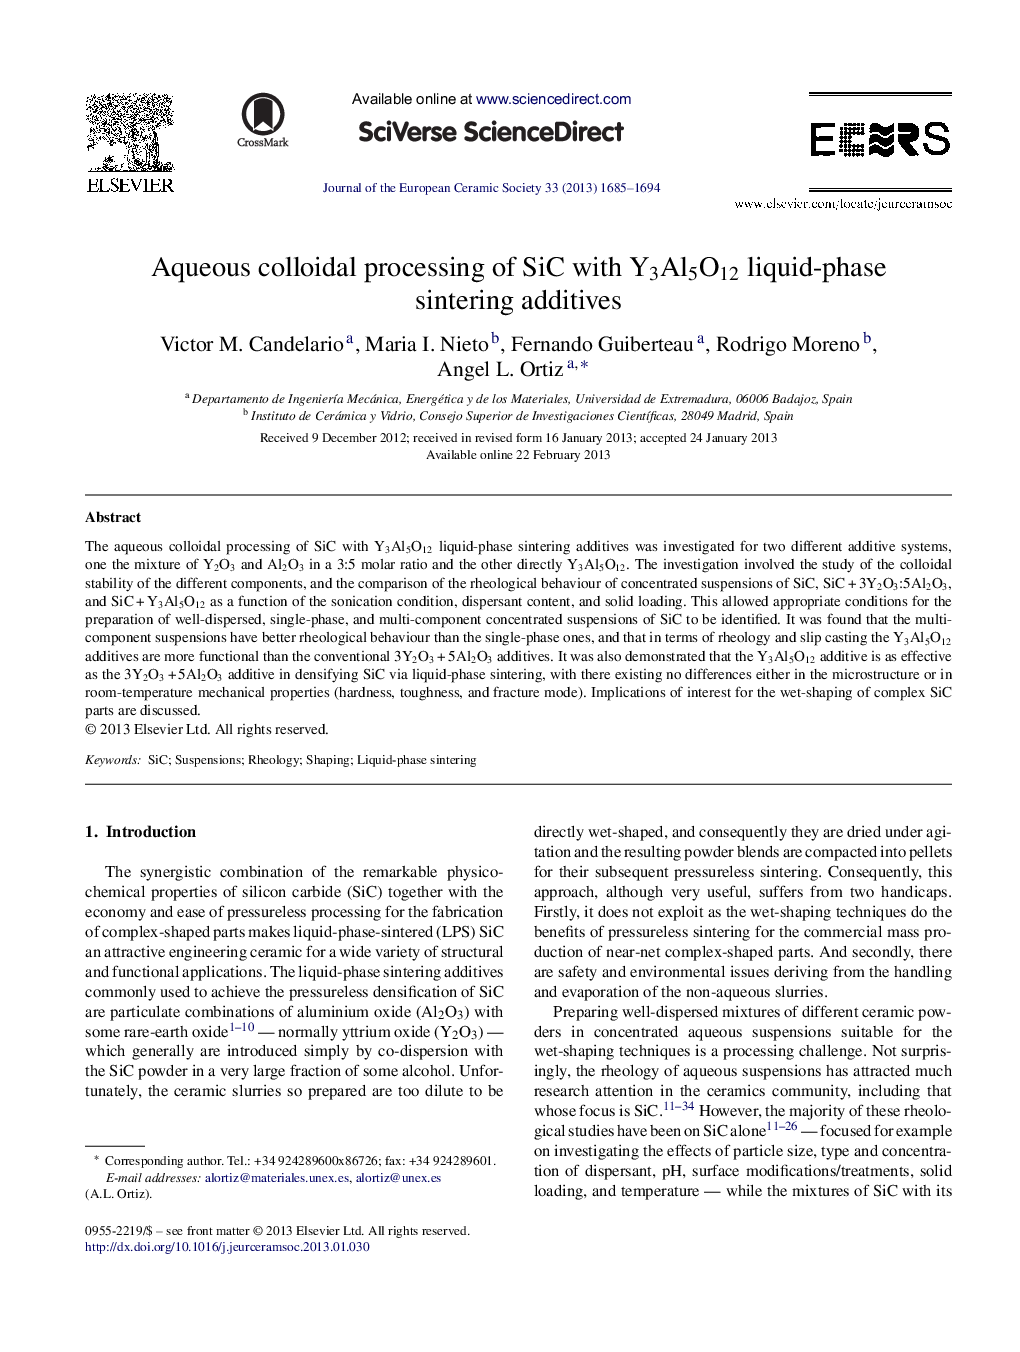 Aqueous colloidal processing of SiC with Y3Al5O12 liquid-phase sintering additives